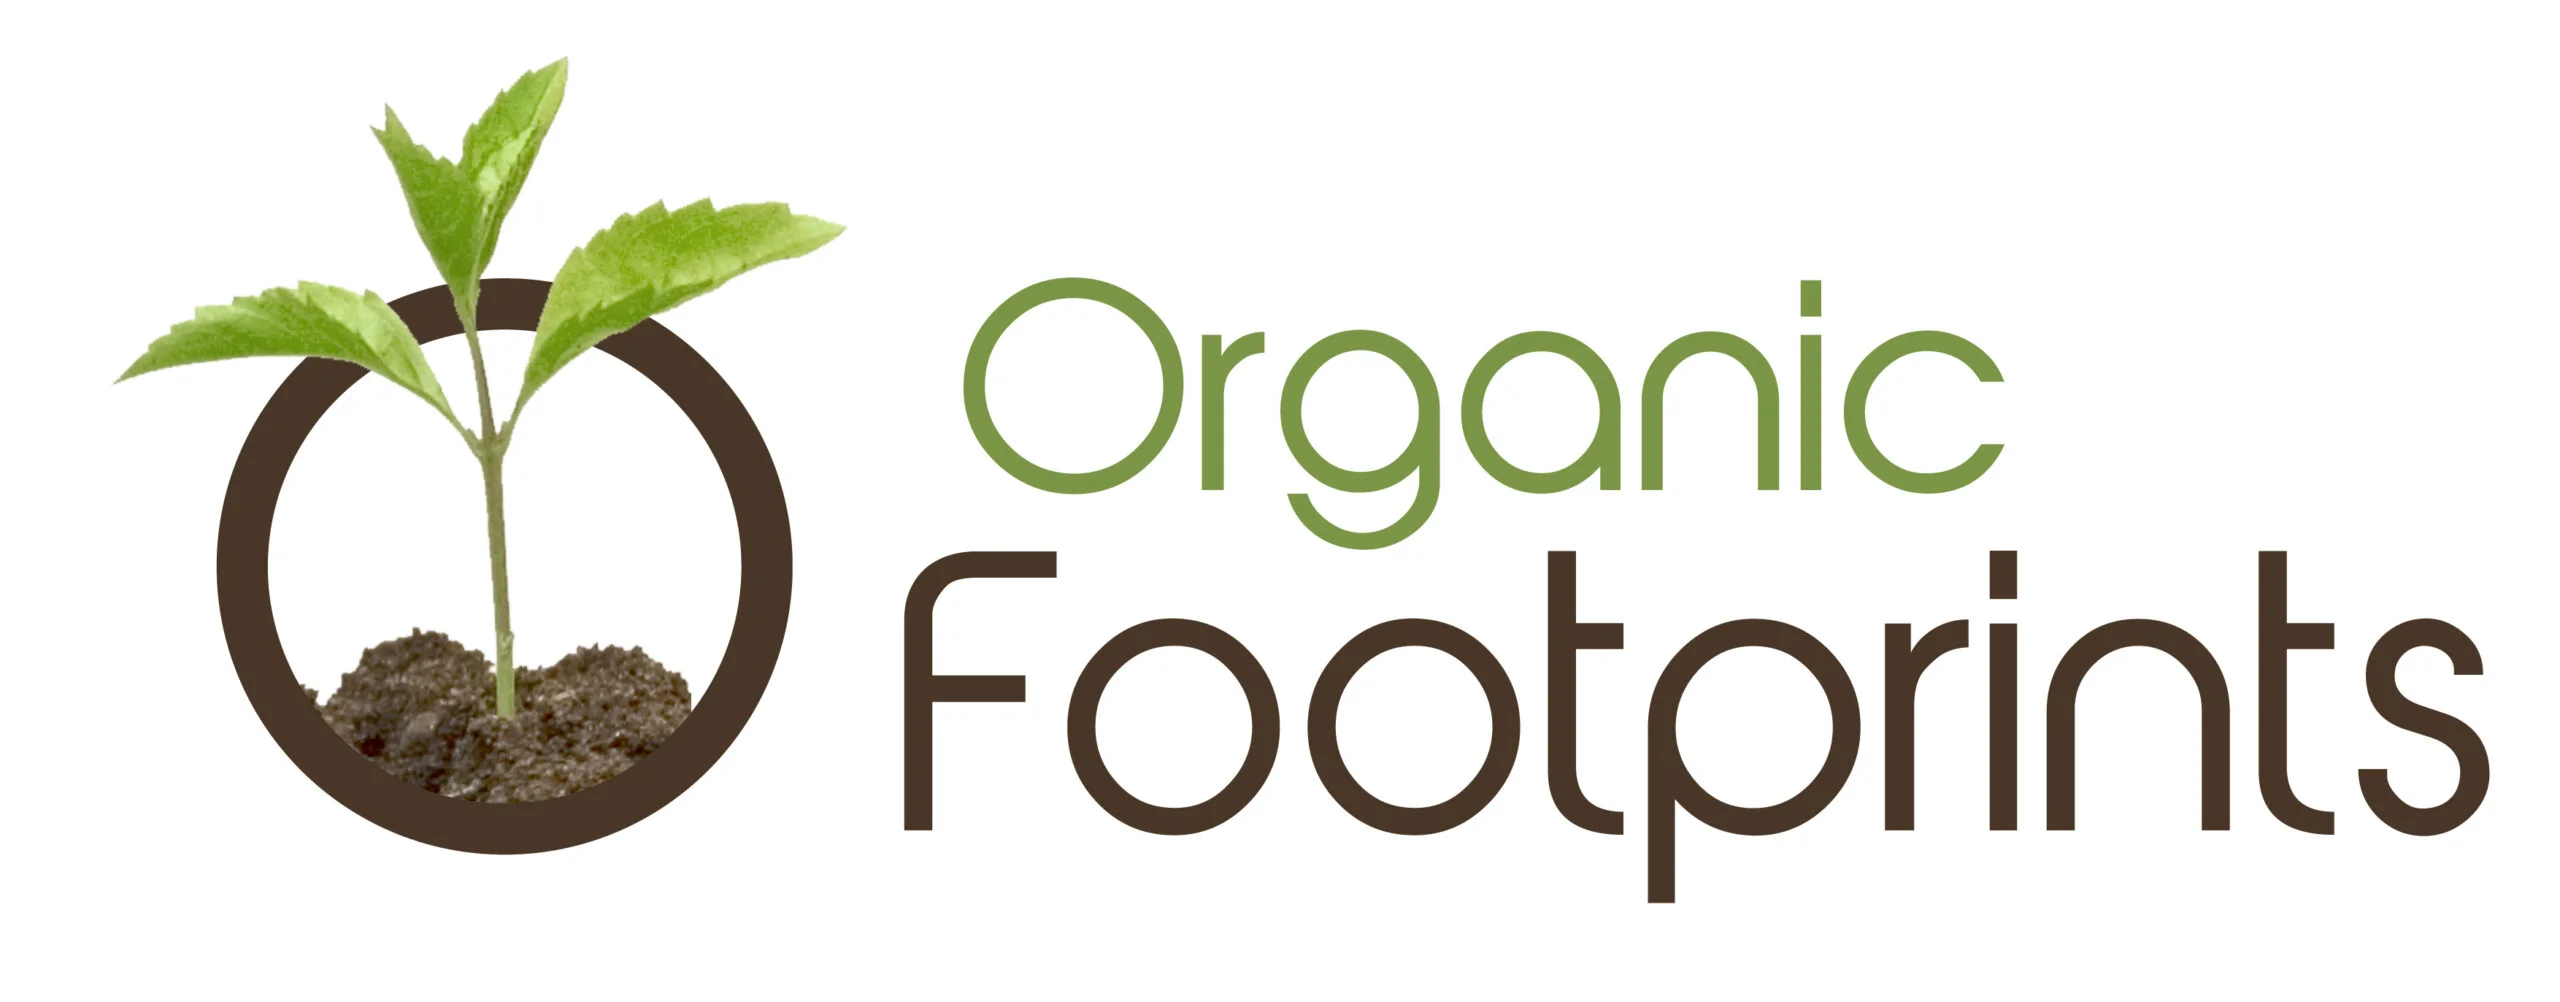 Organic Footprints